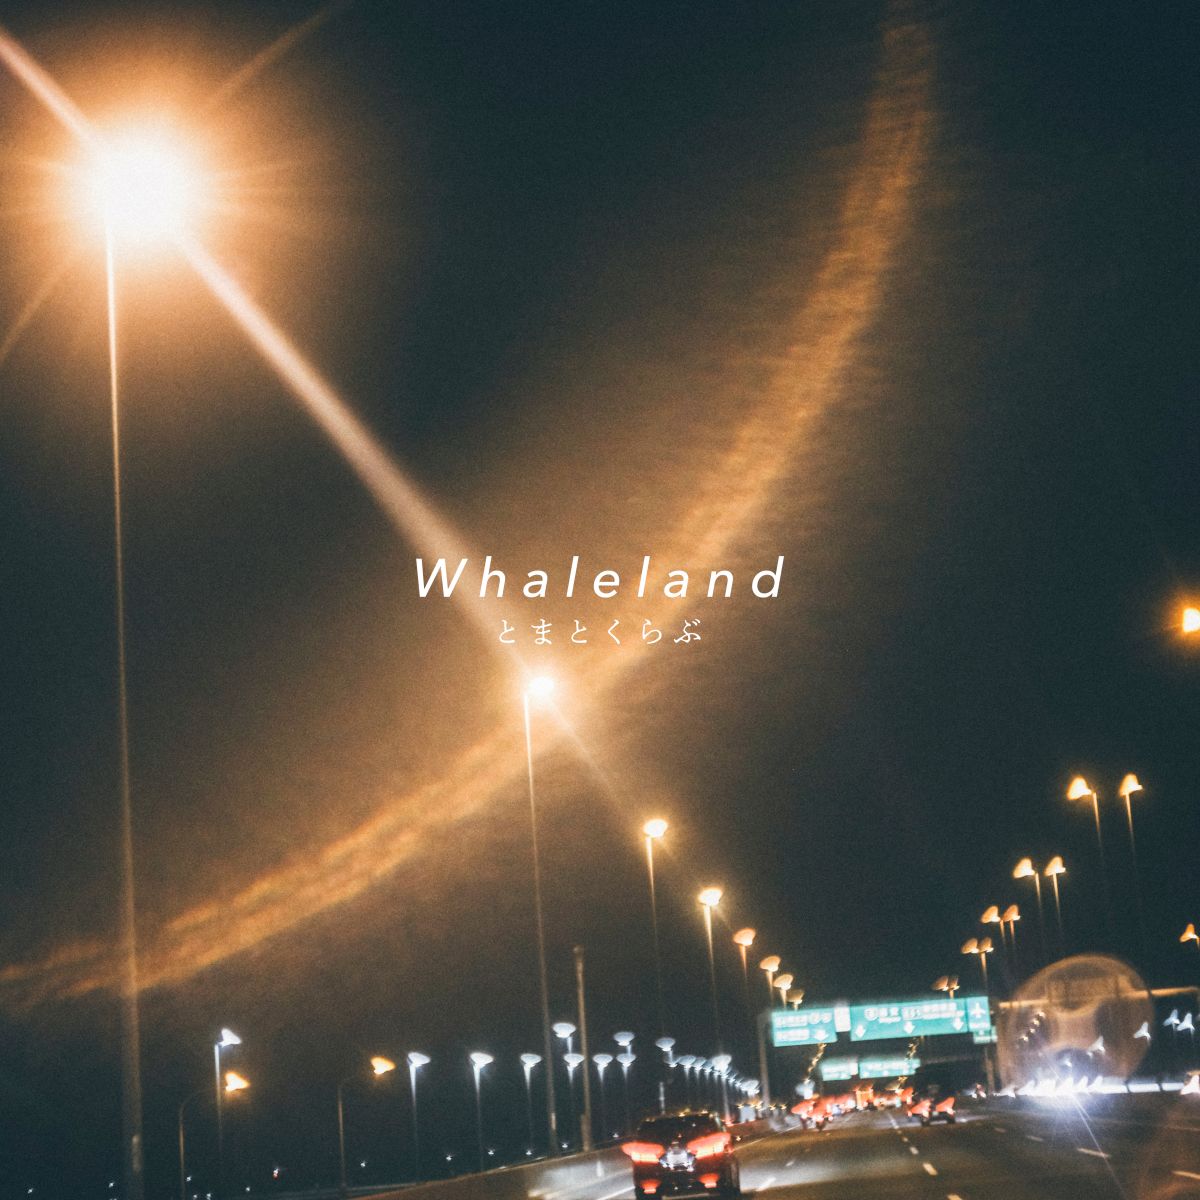 Whaleland